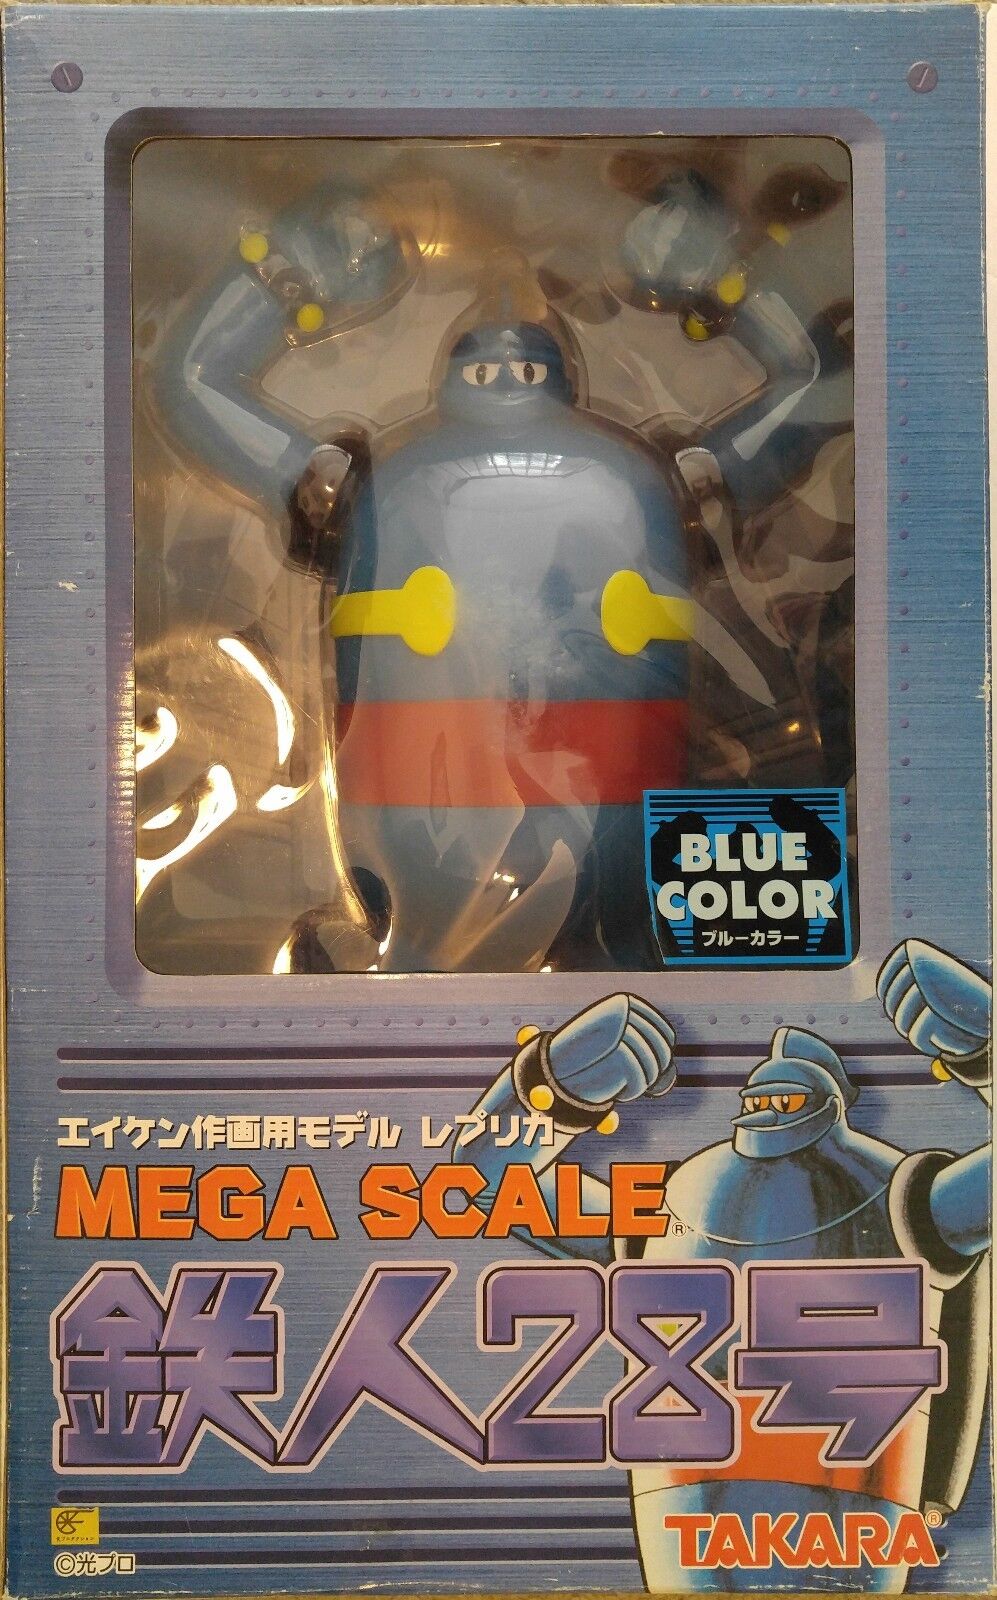 TETSUJIN 28 / GIGANTOR. Takara Mega Scale Toy. Blue color. In Box [Anime, Manga]